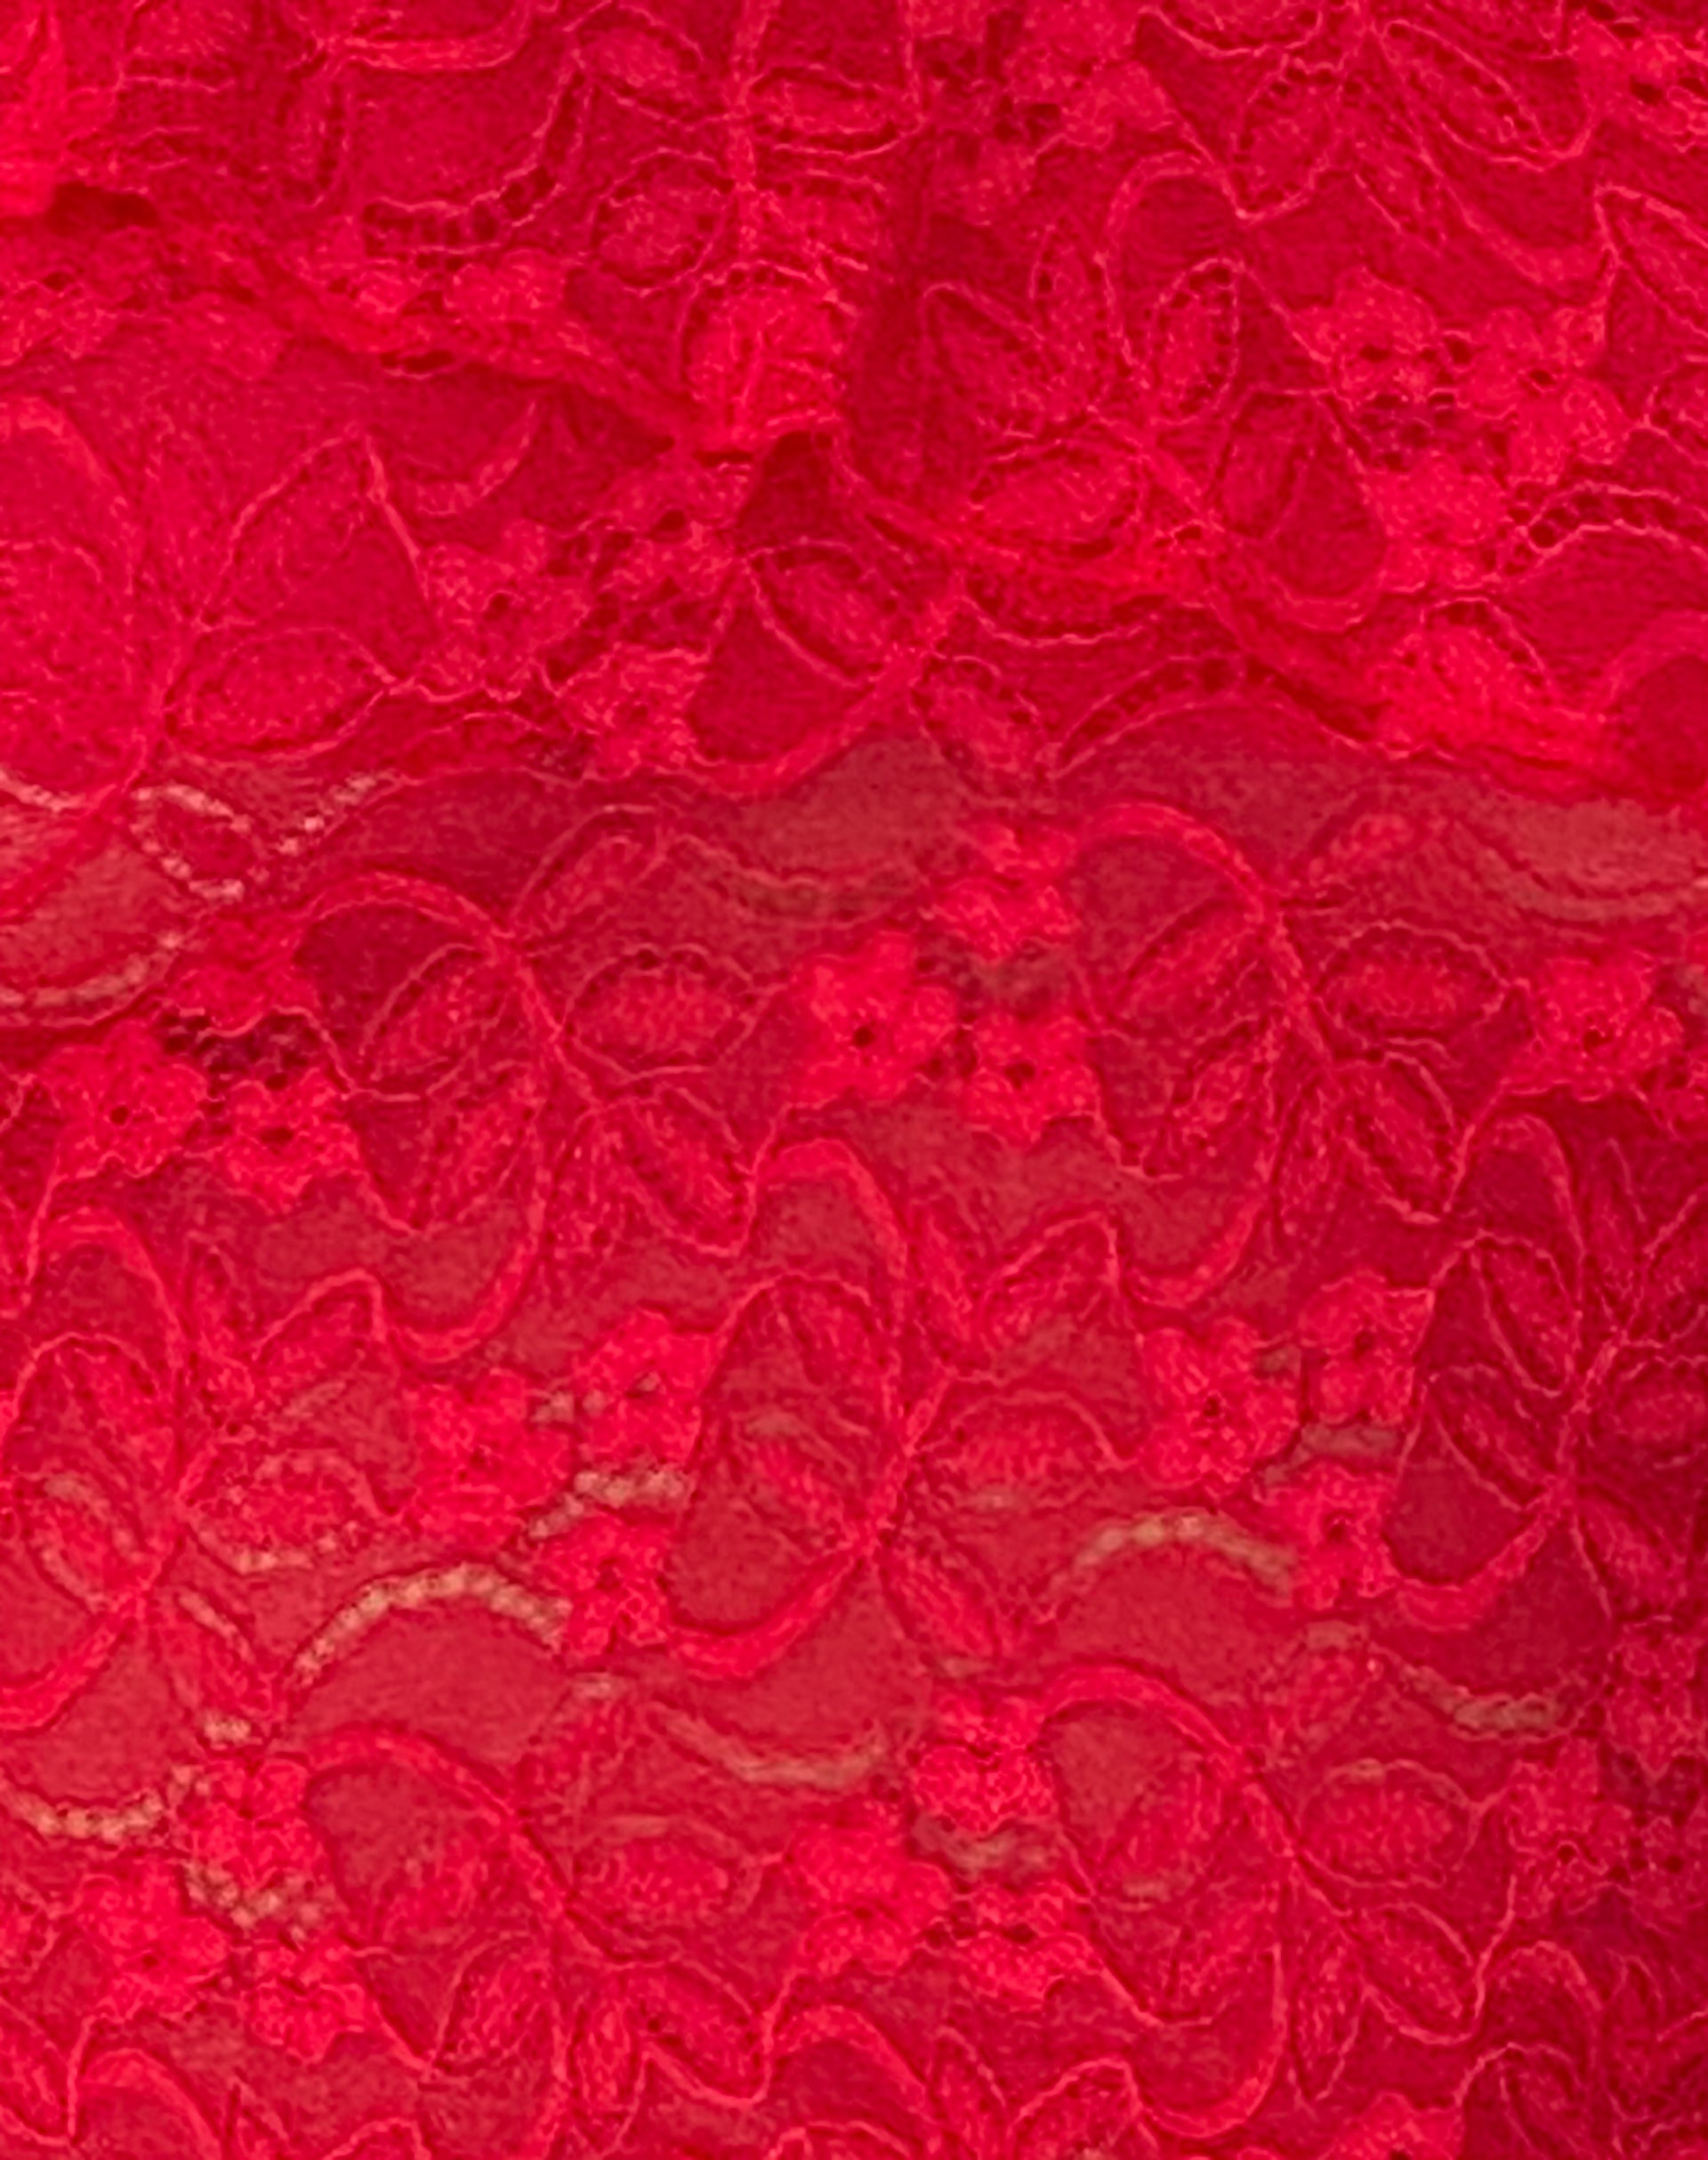 Soka Bardot Frill Top in Red Lace